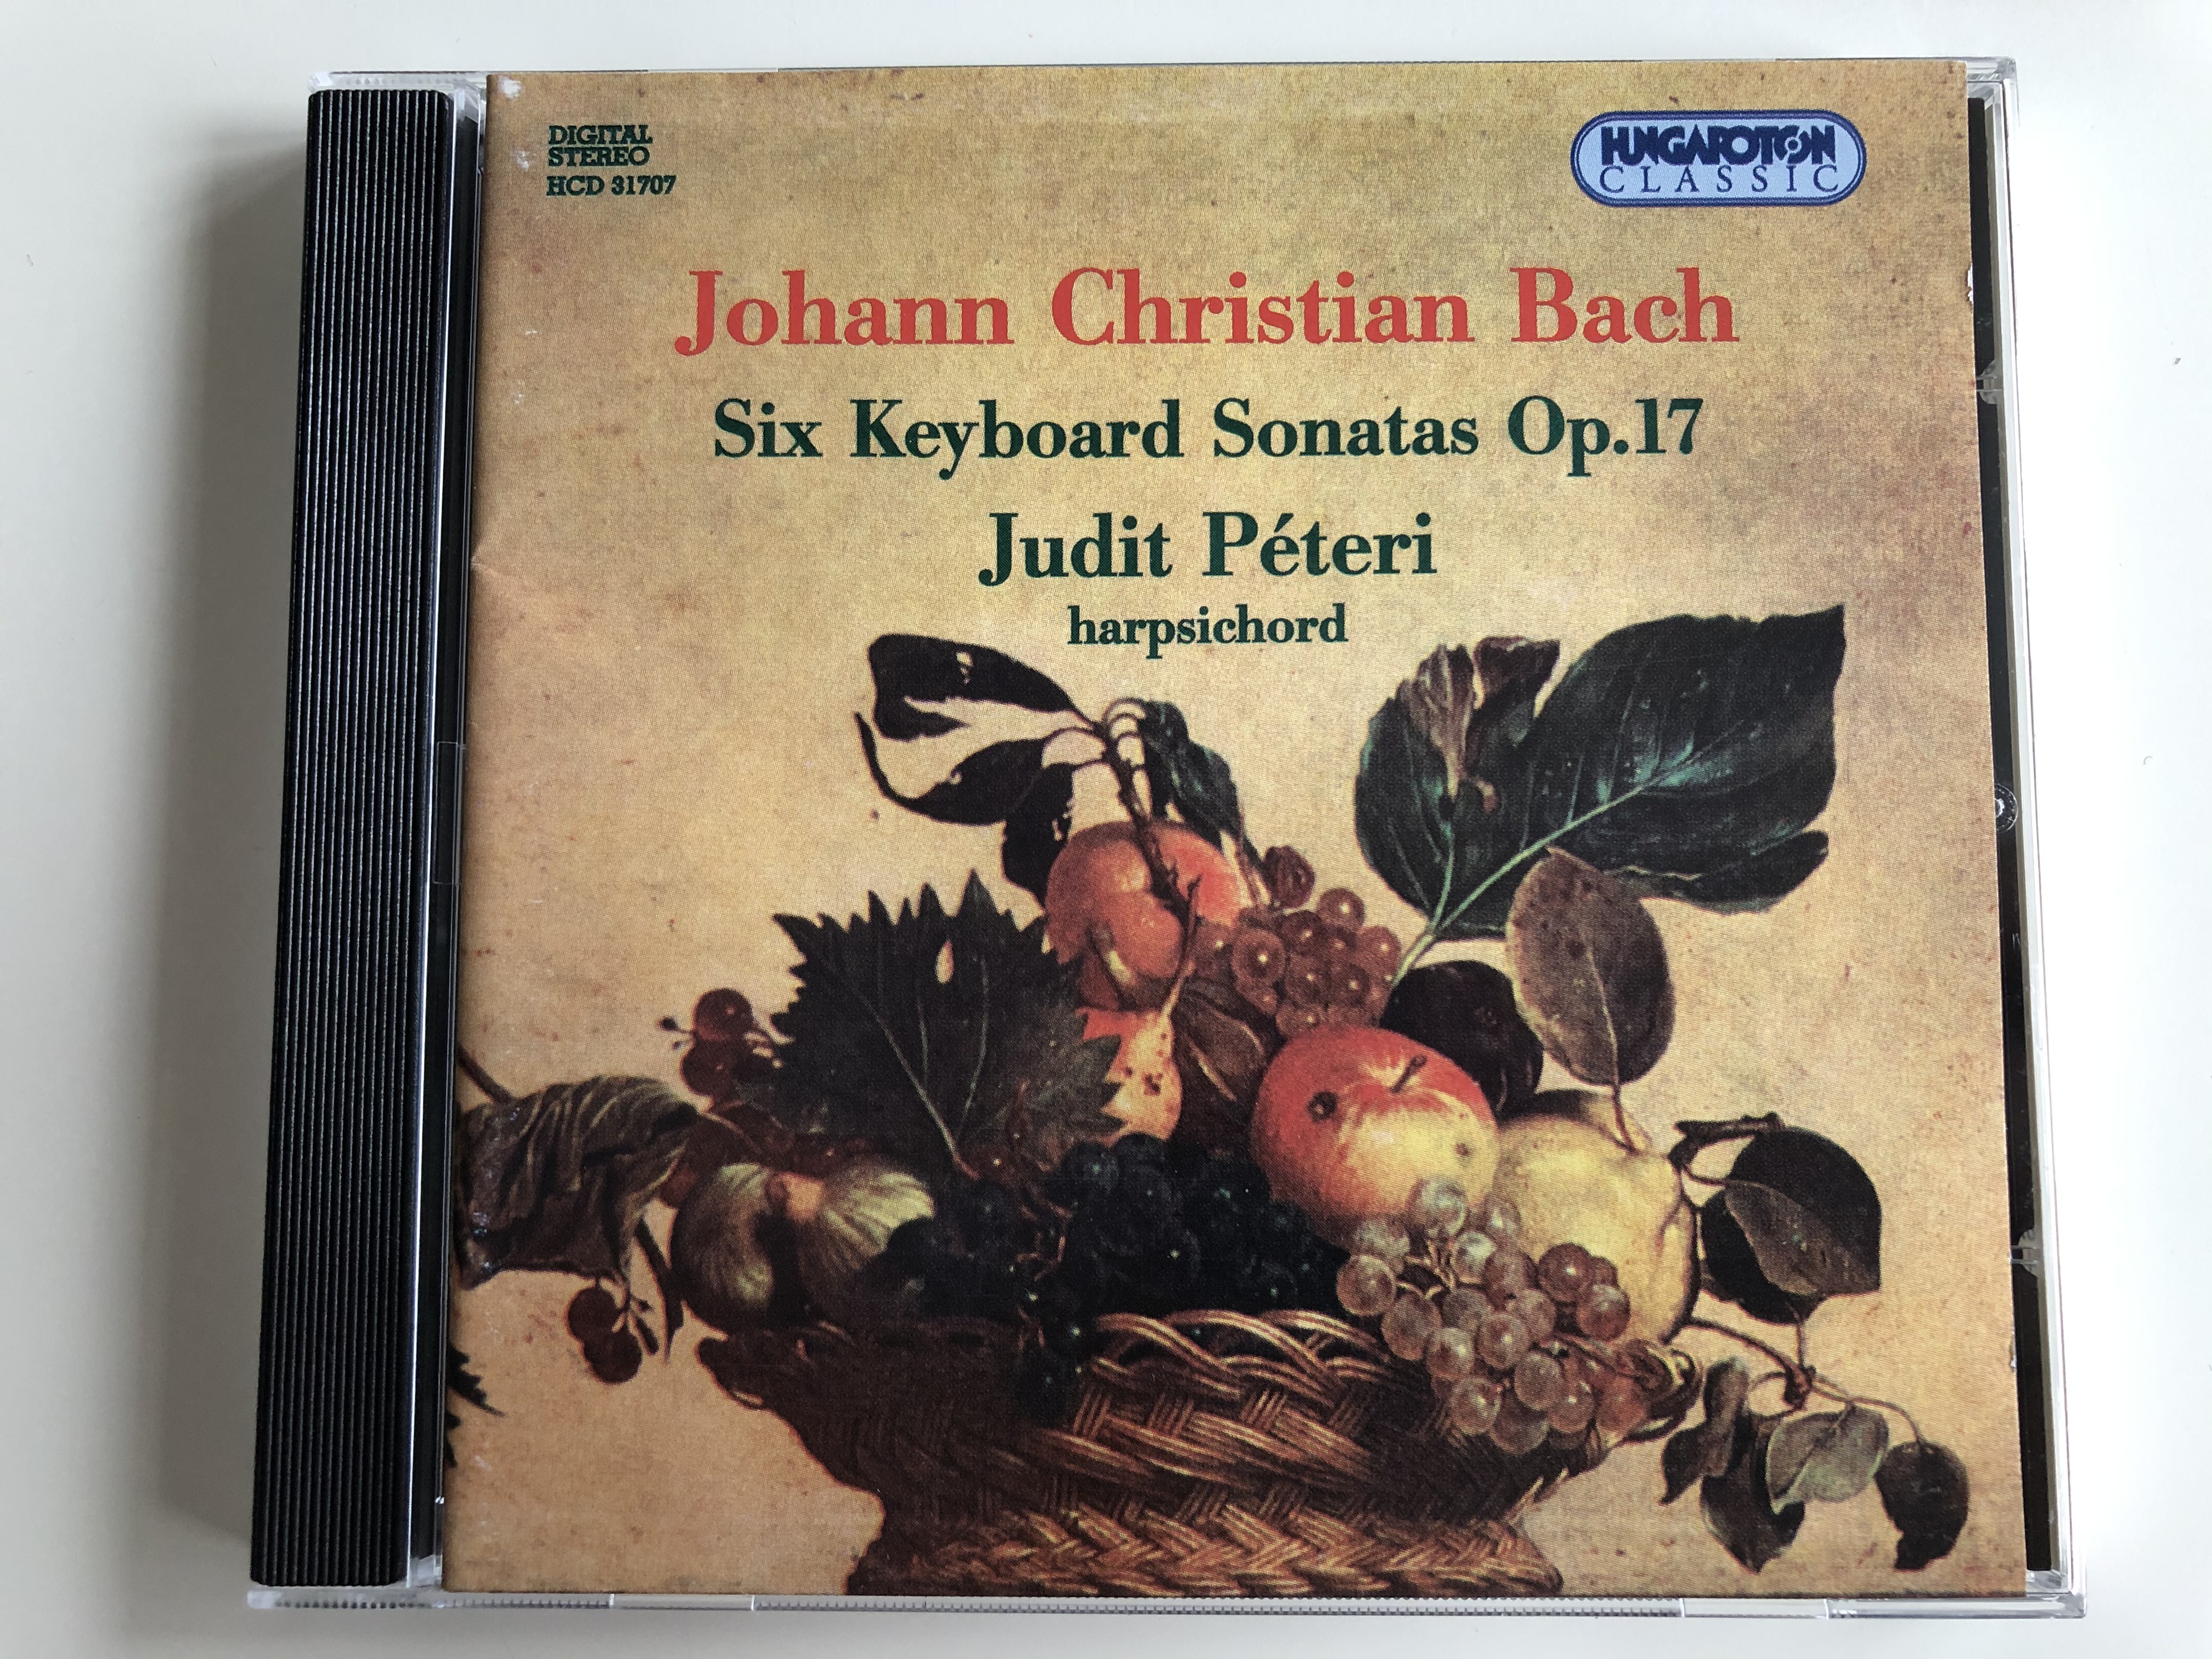 johann-christian-bach-six-keyboard-sonatas-op.17-judit-p-teri-harpsichord-hungaroton-classic-audio-cd-1997-stereo-hcd-31707-1-.jpg